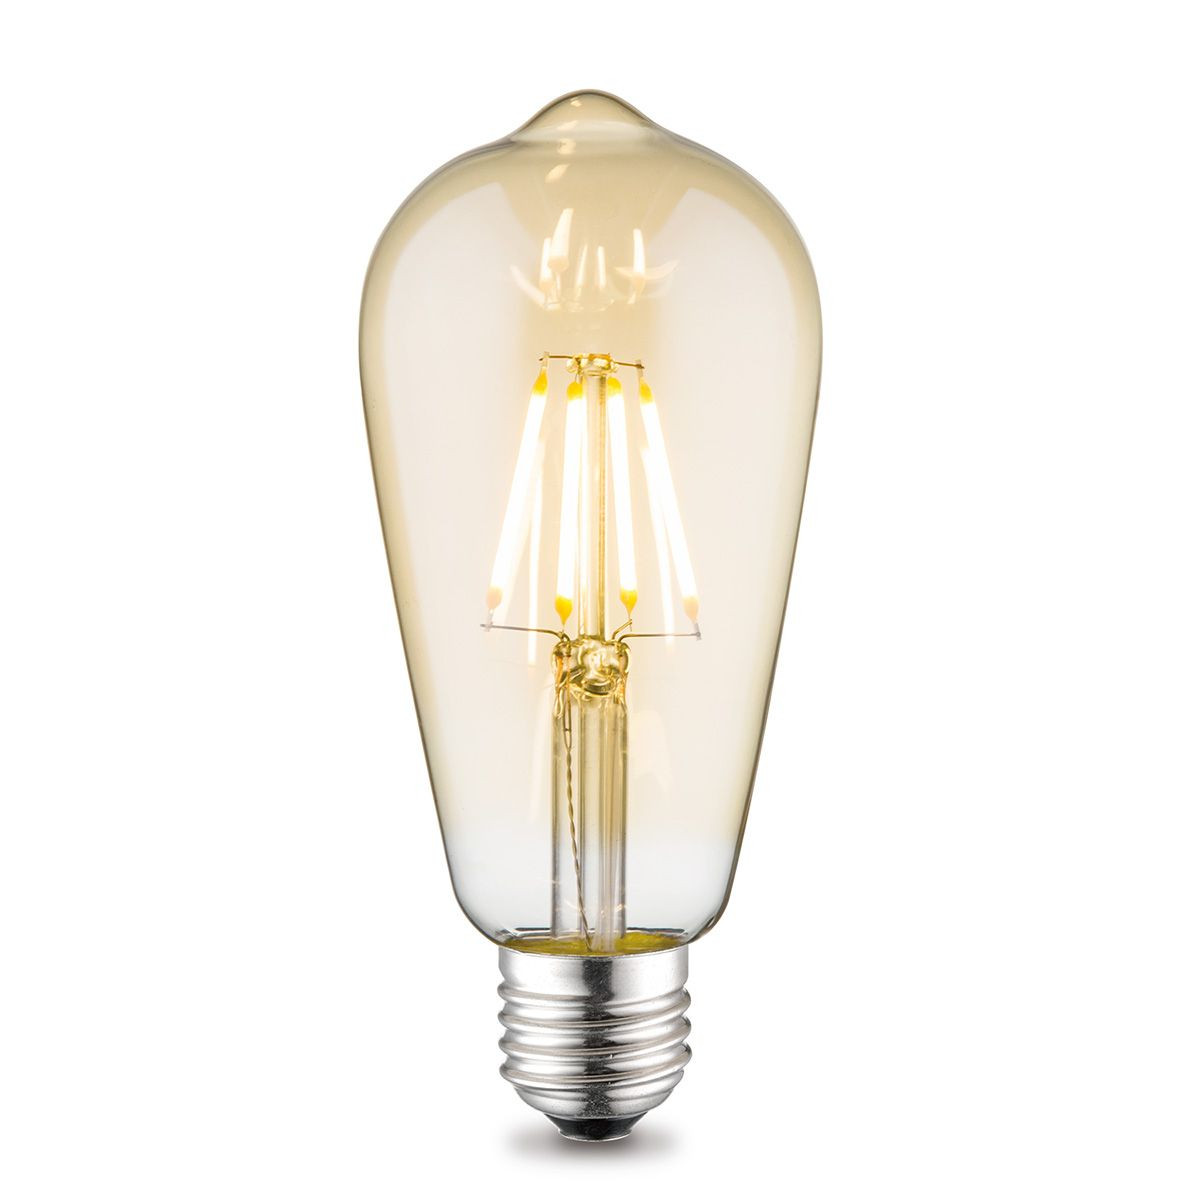 Edison Vintage LED lamp E27 LED filament lichtbron, Deco Drop ST64, 6.4/6.4/14cm, Amber, Retro LED lamp Dimbaar, 6W 660lm 2700K, warm wit licht, geschikt voor E27 fitting